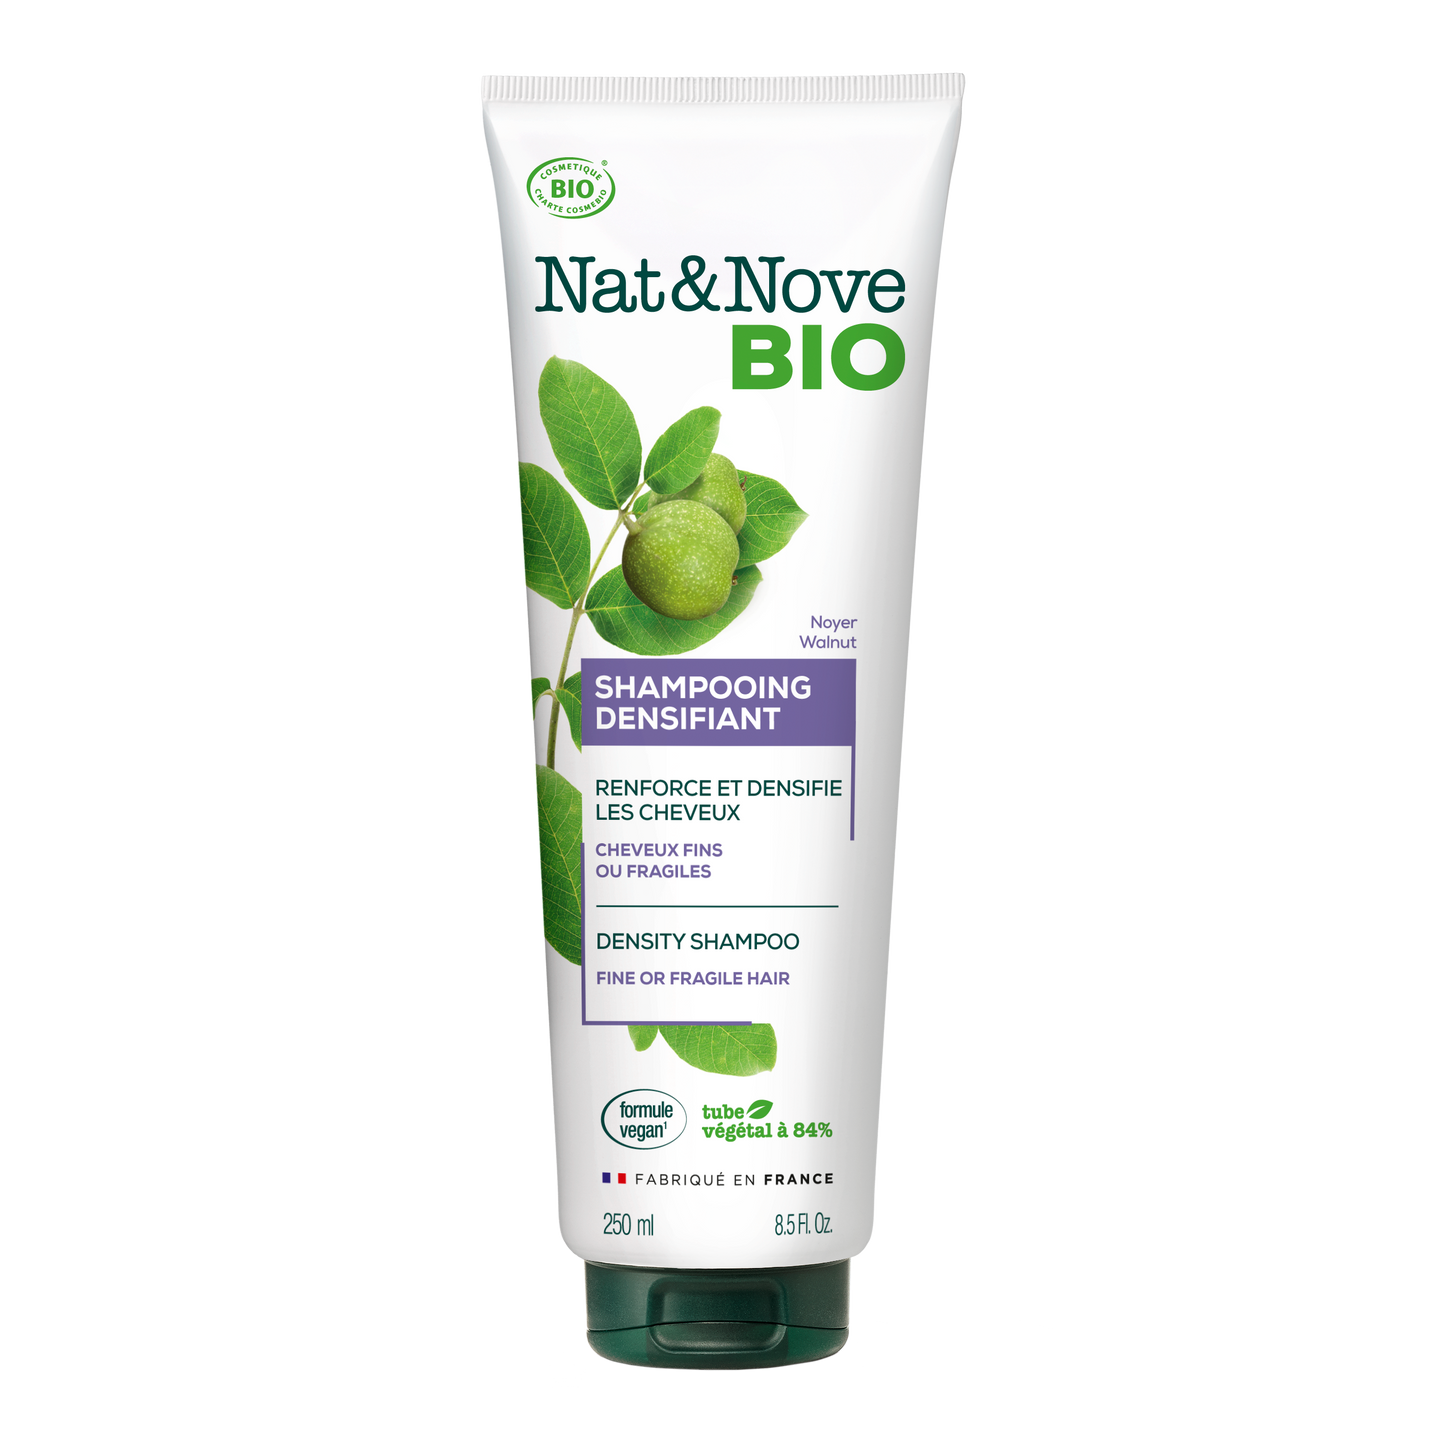 Nat & Nove Bio - Density Shampoo with Walnut - Σαμπουάν πυκνότητας με καρυδιά για εύθραυστα μαλλιά